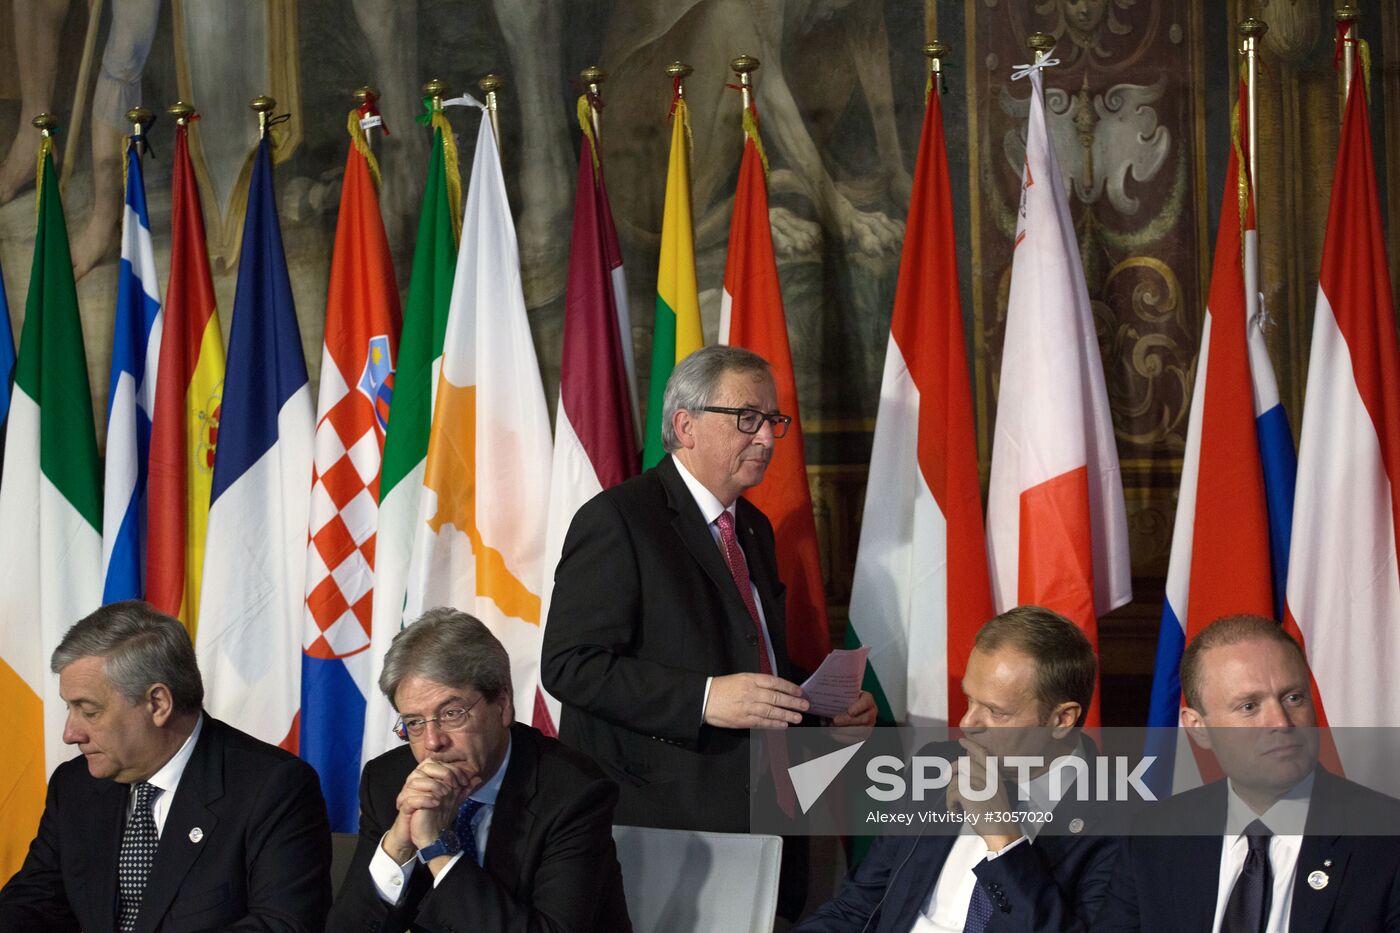 EU Rome Summit